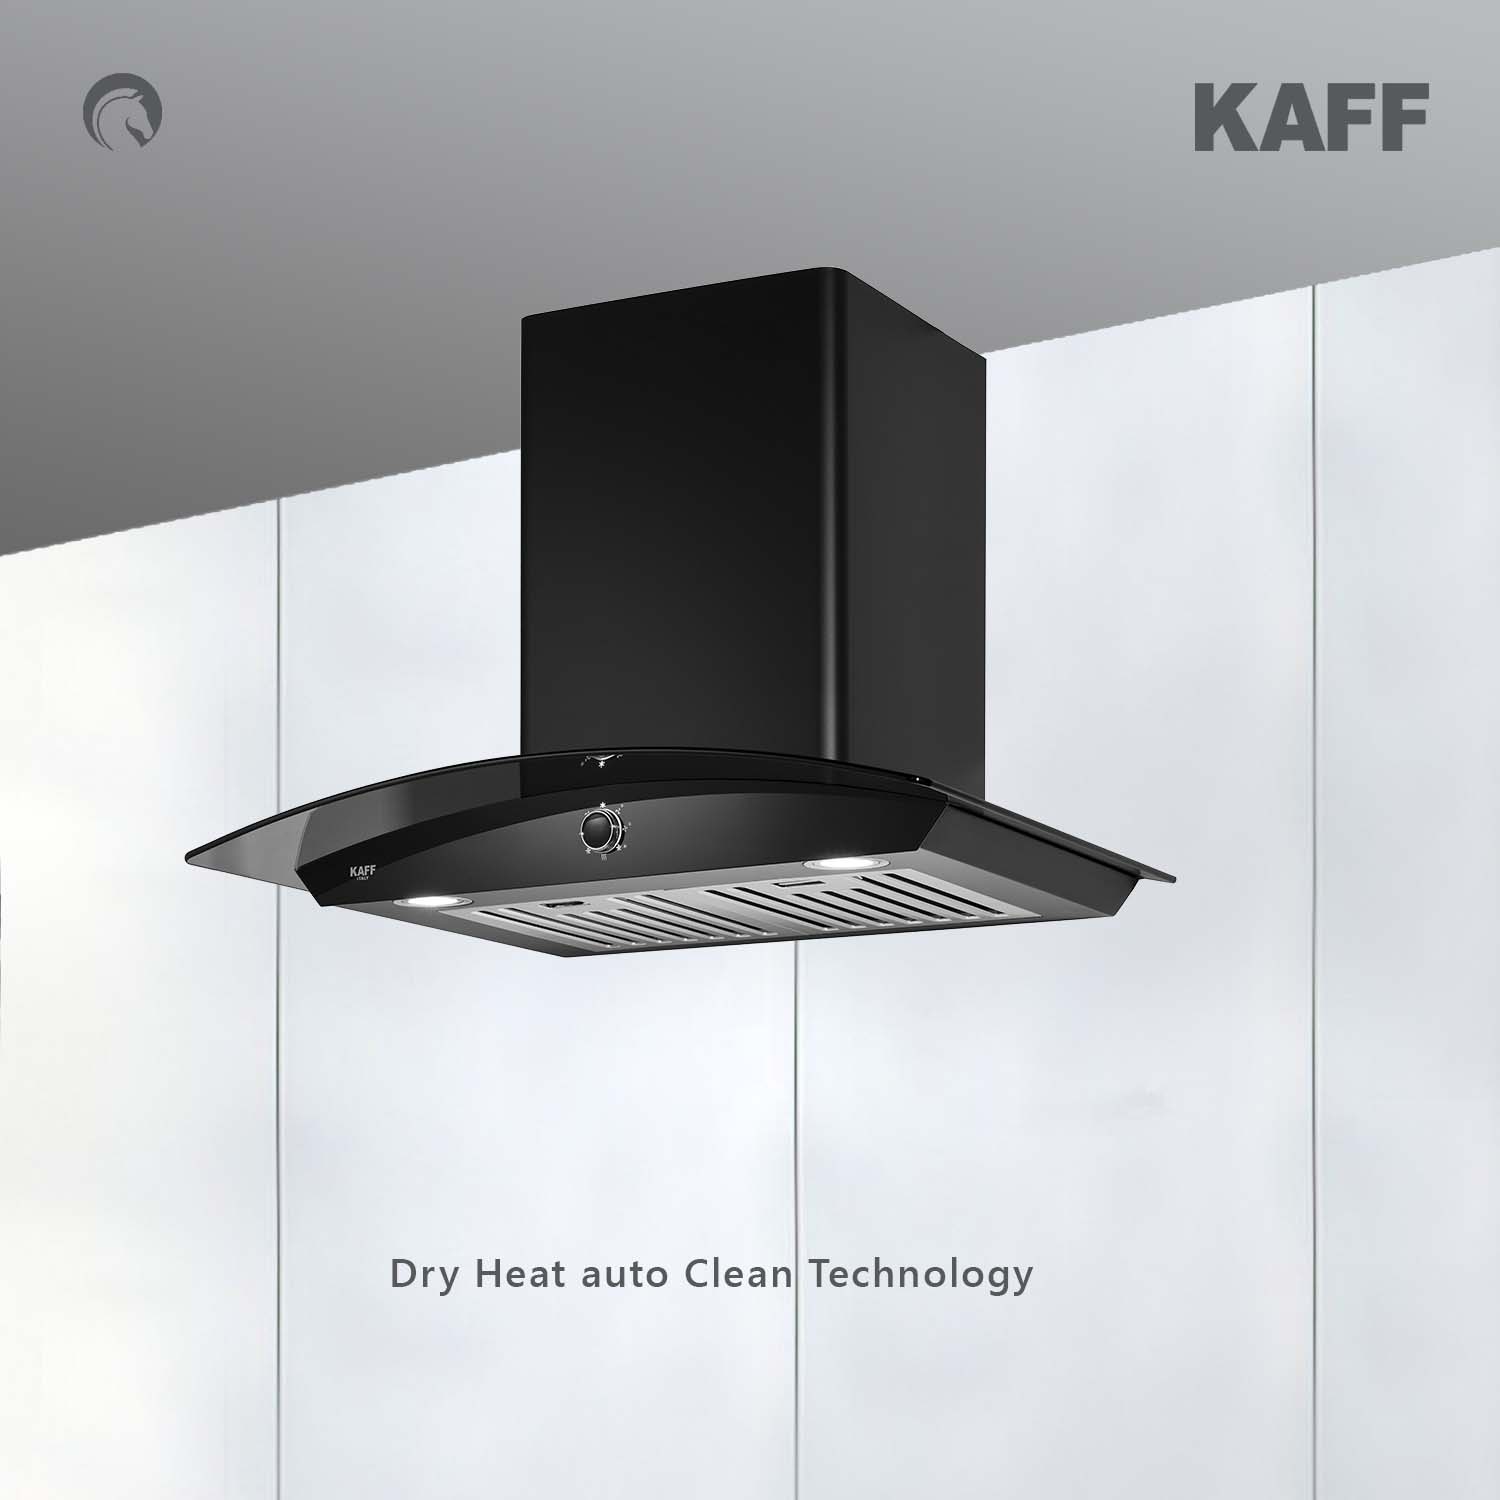 Kaff Chimney | LATINO DHC 70| Dry Heat auto Clean Technology |Matt Black Finish